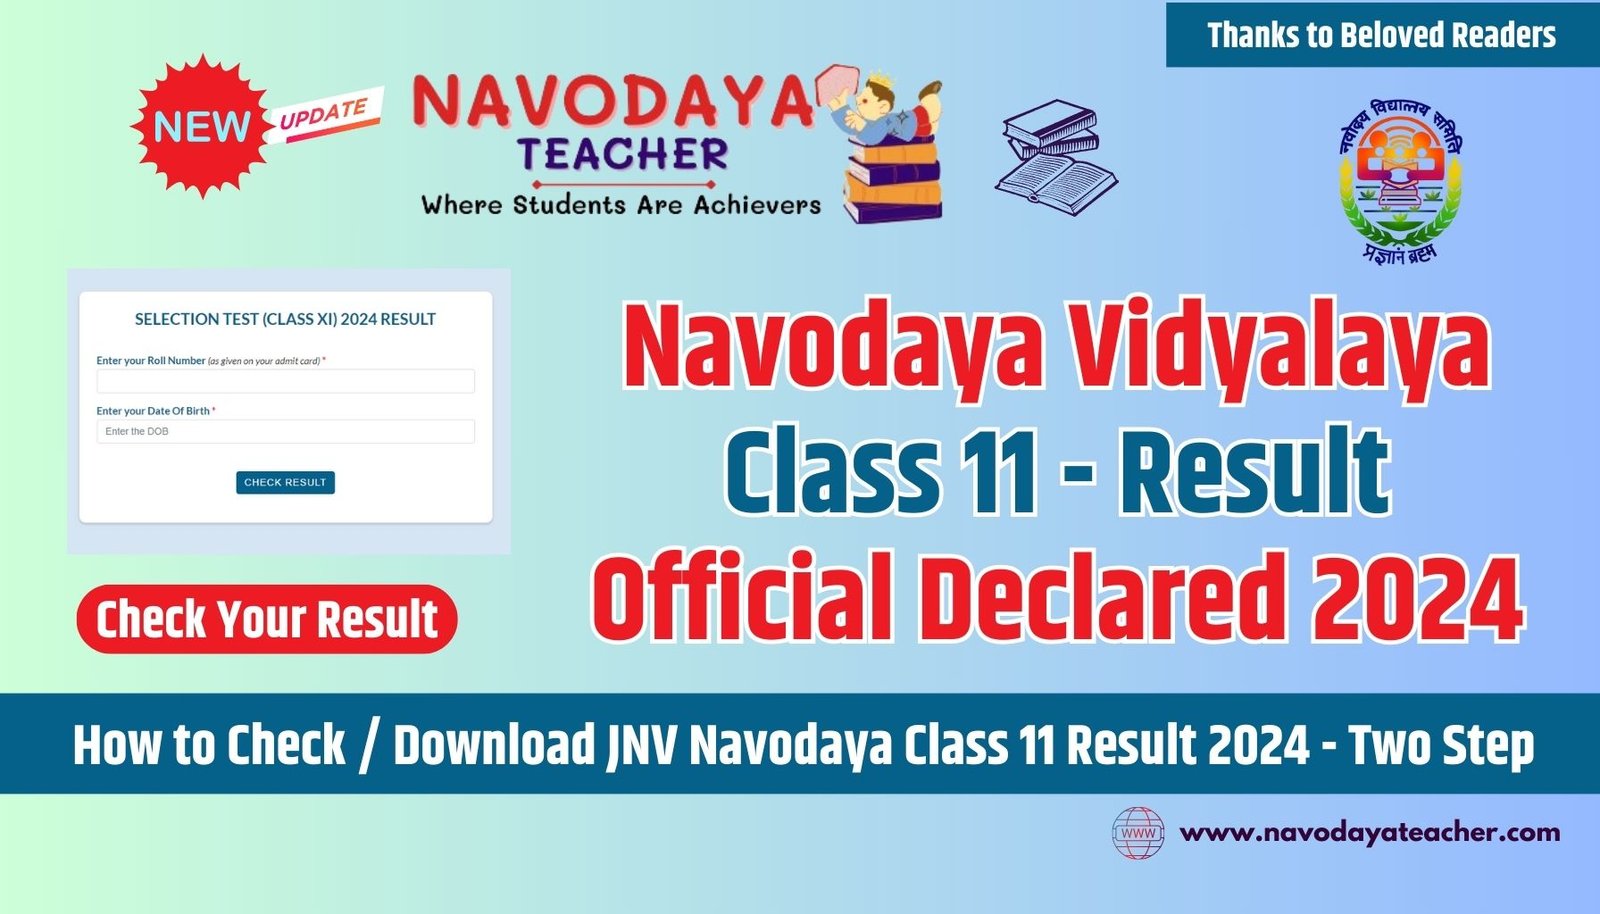 Jawahar Navodaya Class 11 - Result Official Declared 2024